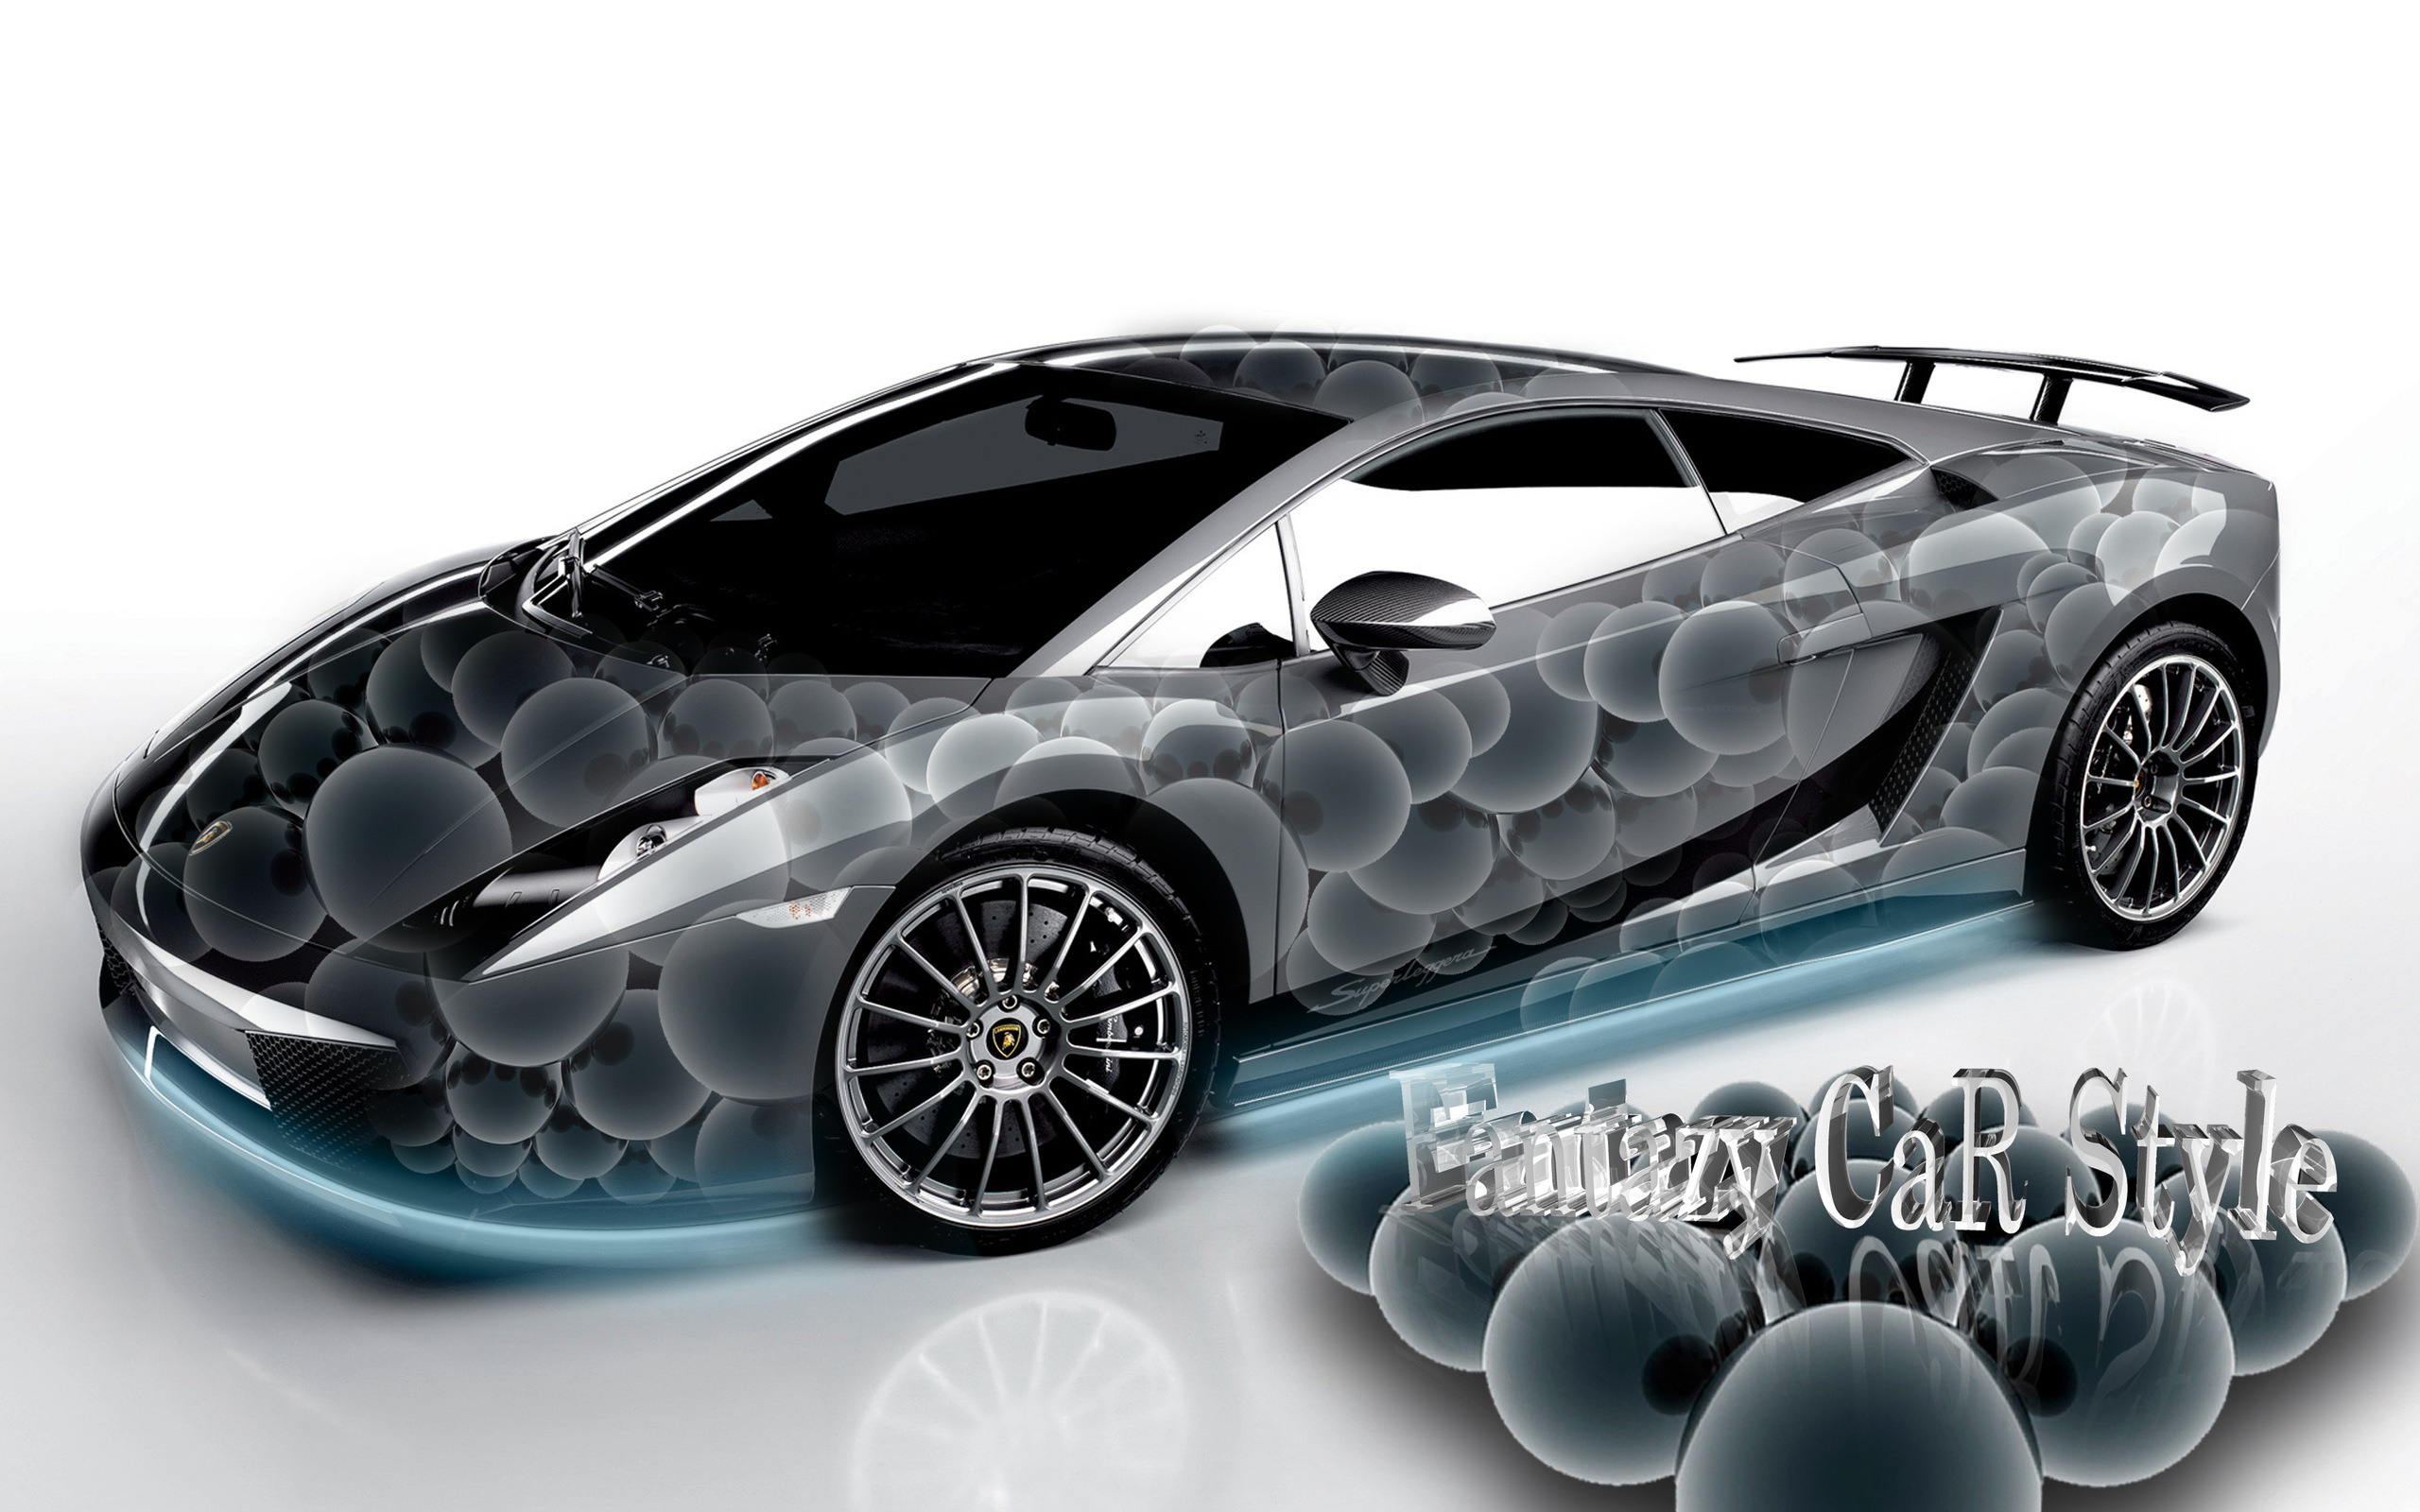 3d обои Фантазийная модель авто с шарами для боулинга (Fantazy Car Style)  шарики # 89272